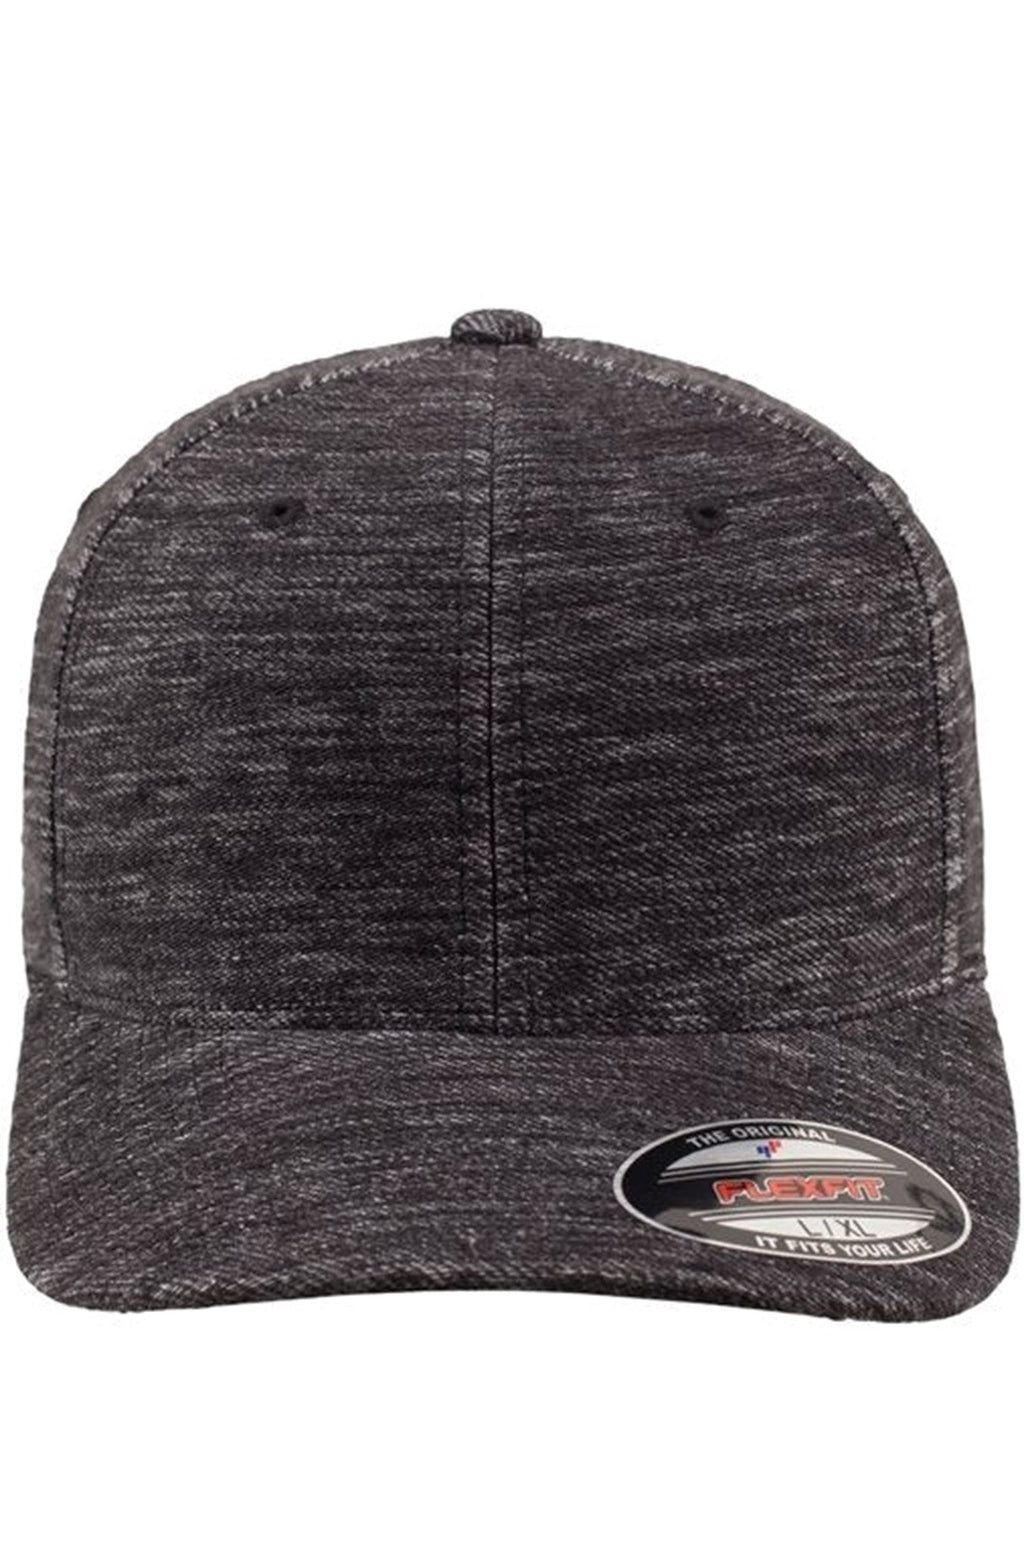 Flexfit Cap da baseball originale - Twill Knit (Grey)